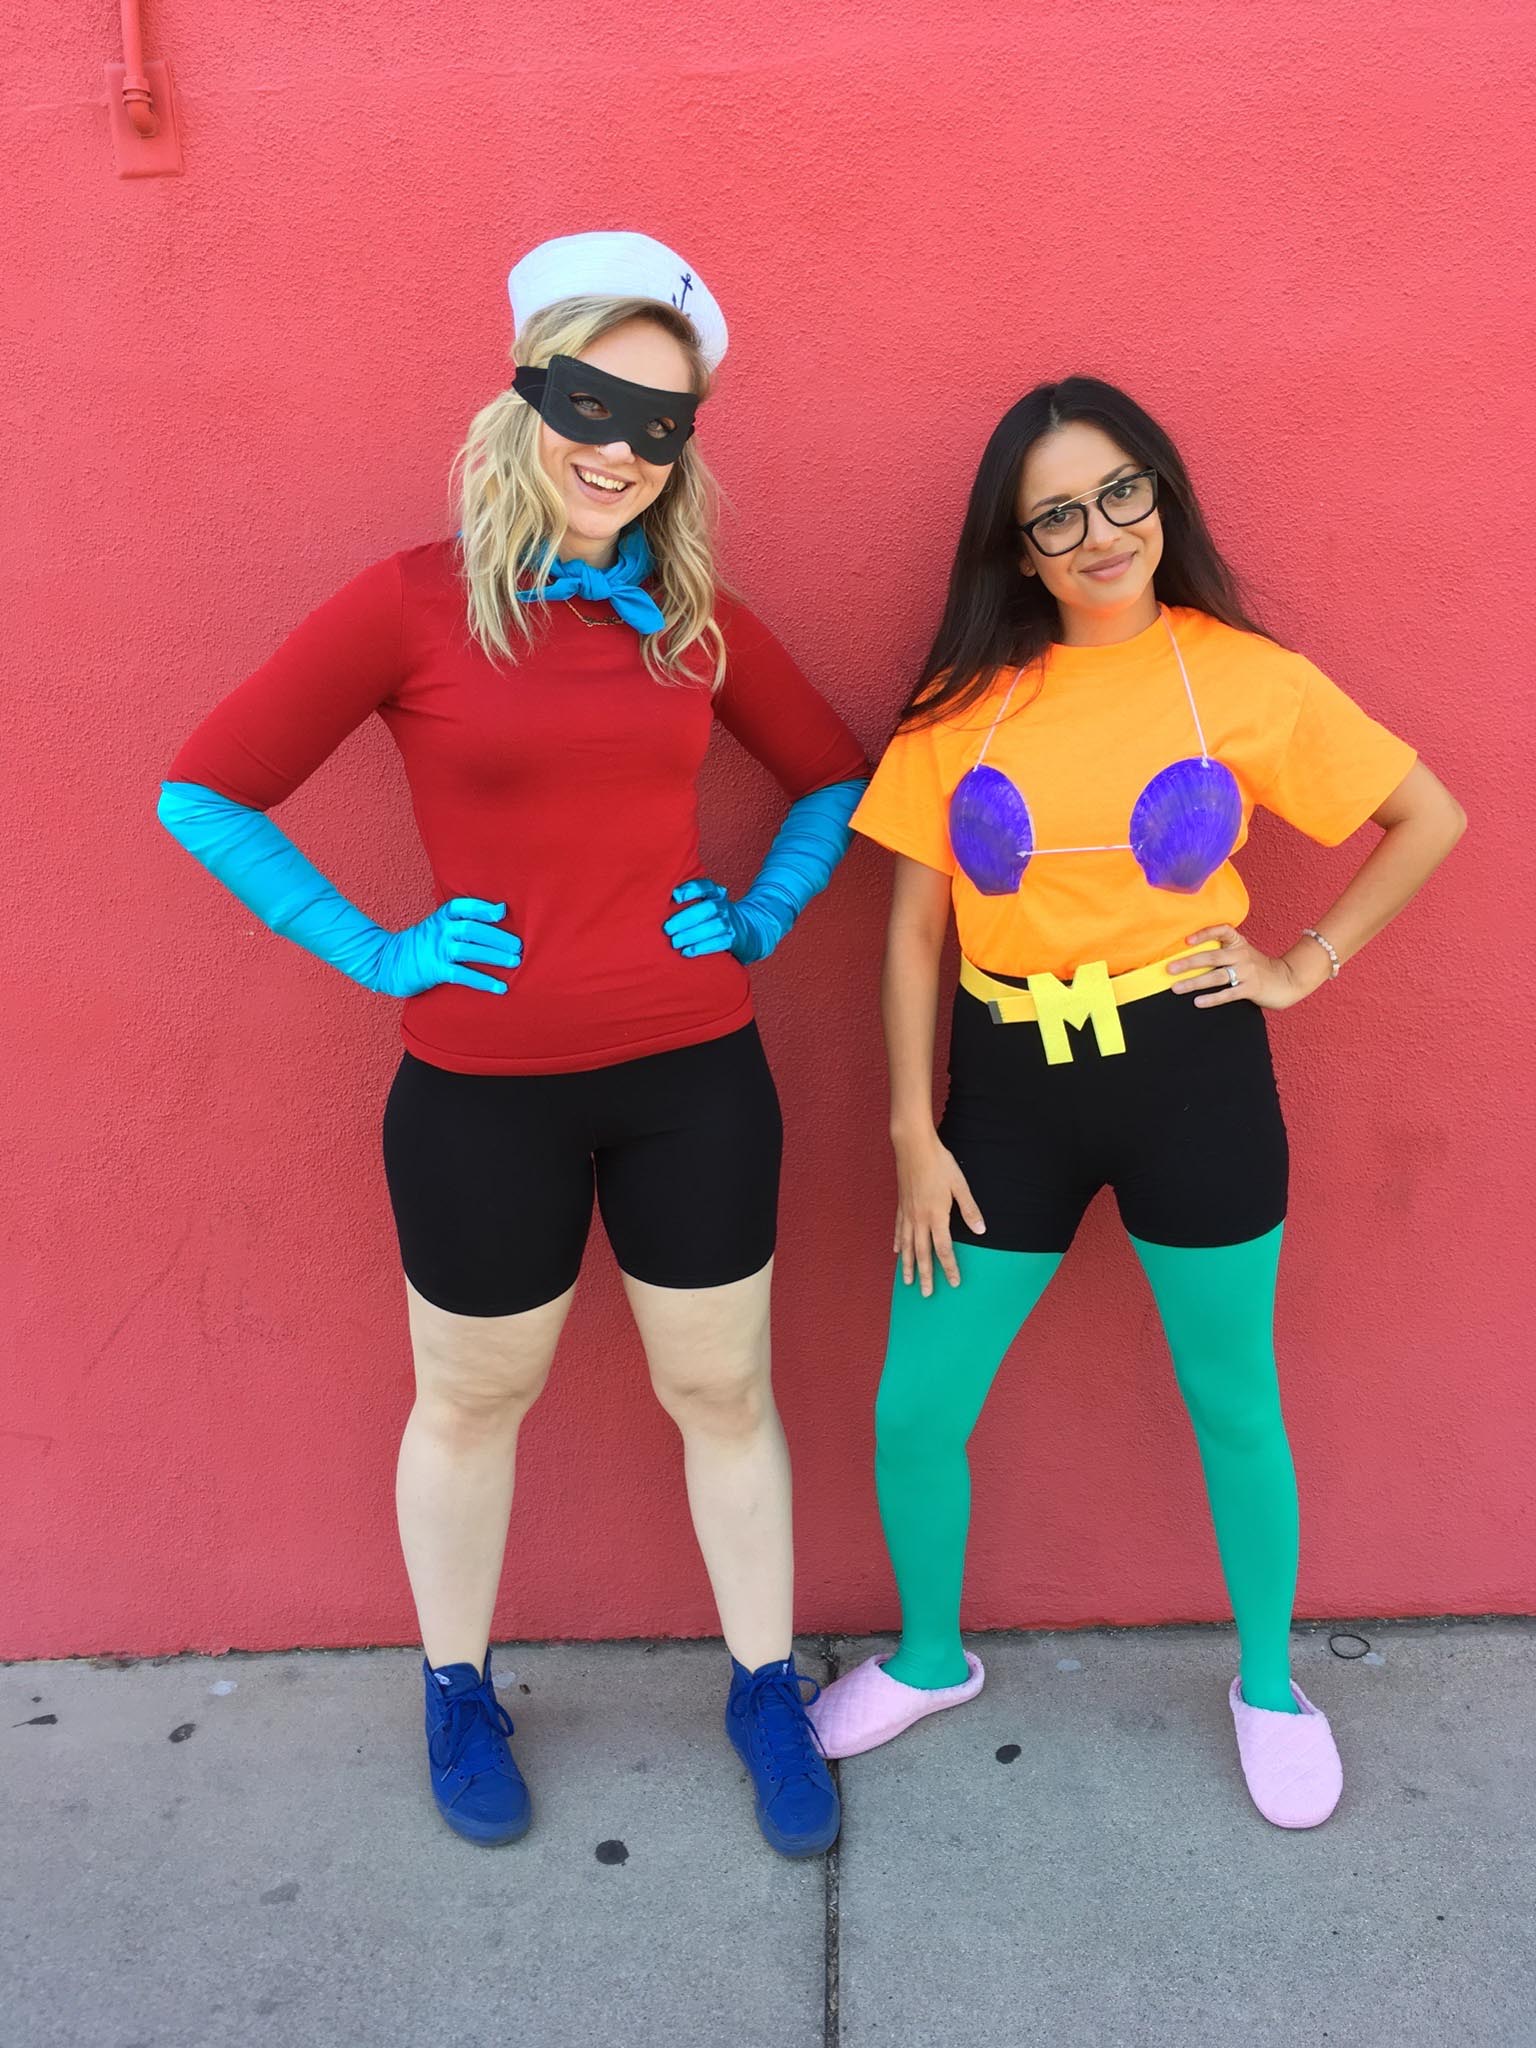 Mermaid Man and Barnacle Boy Spongebob Squarepants costumes, costumes for Halloween 2020